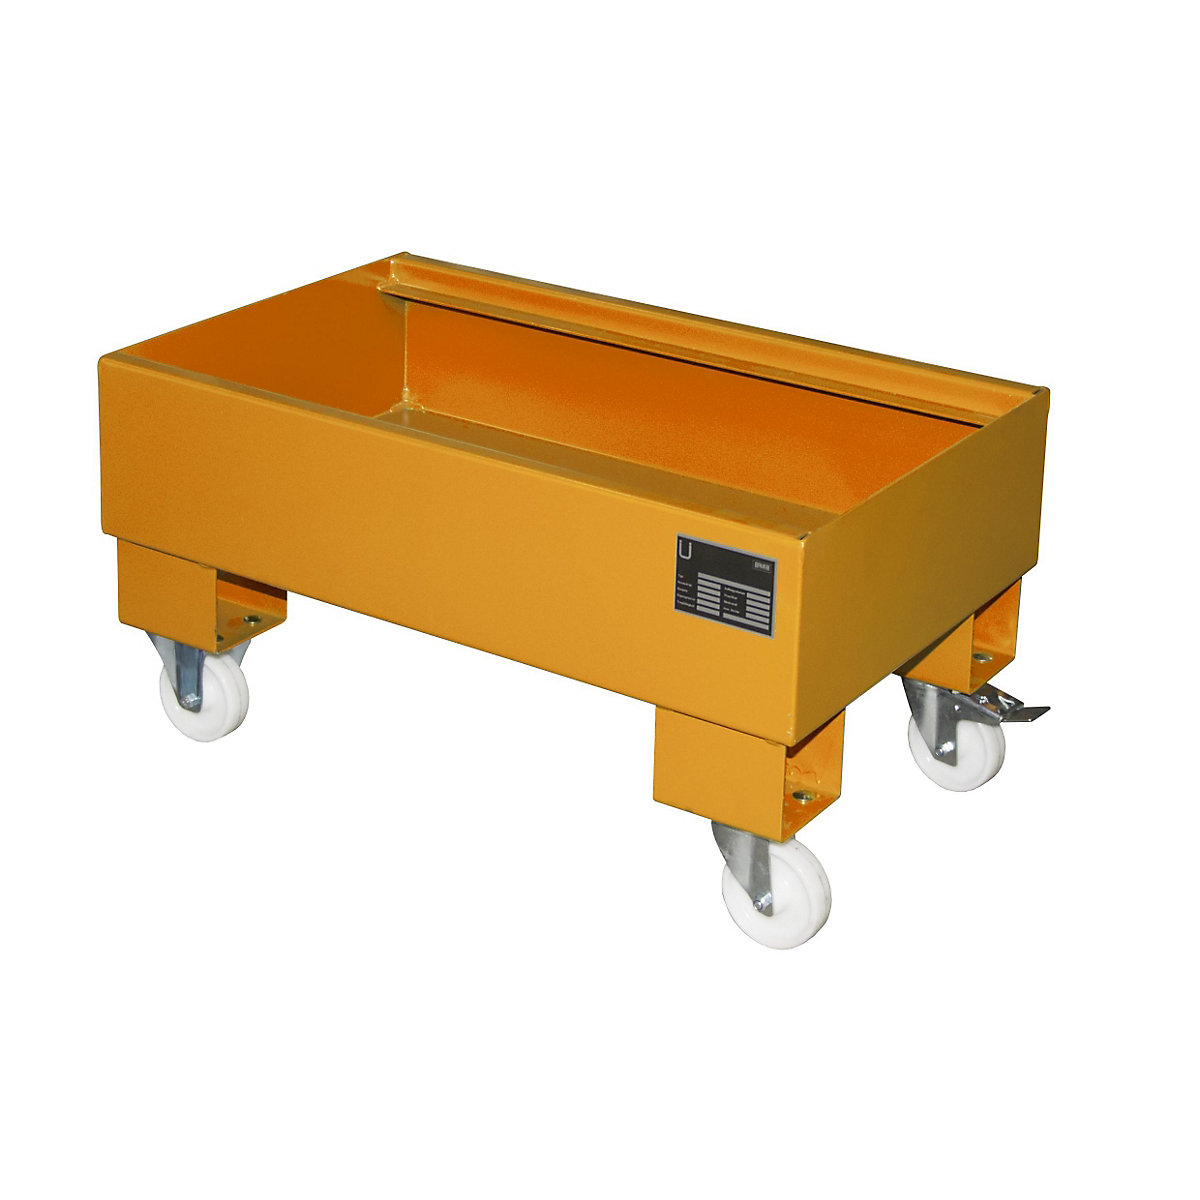 EUROKRAFTpro Stahl-Auffangwanne für 60-l-Fass, fahrbar, LxBxH 800 x 500 x 415 mm, lackiert orange RAL 2000, ohne Gitterrost